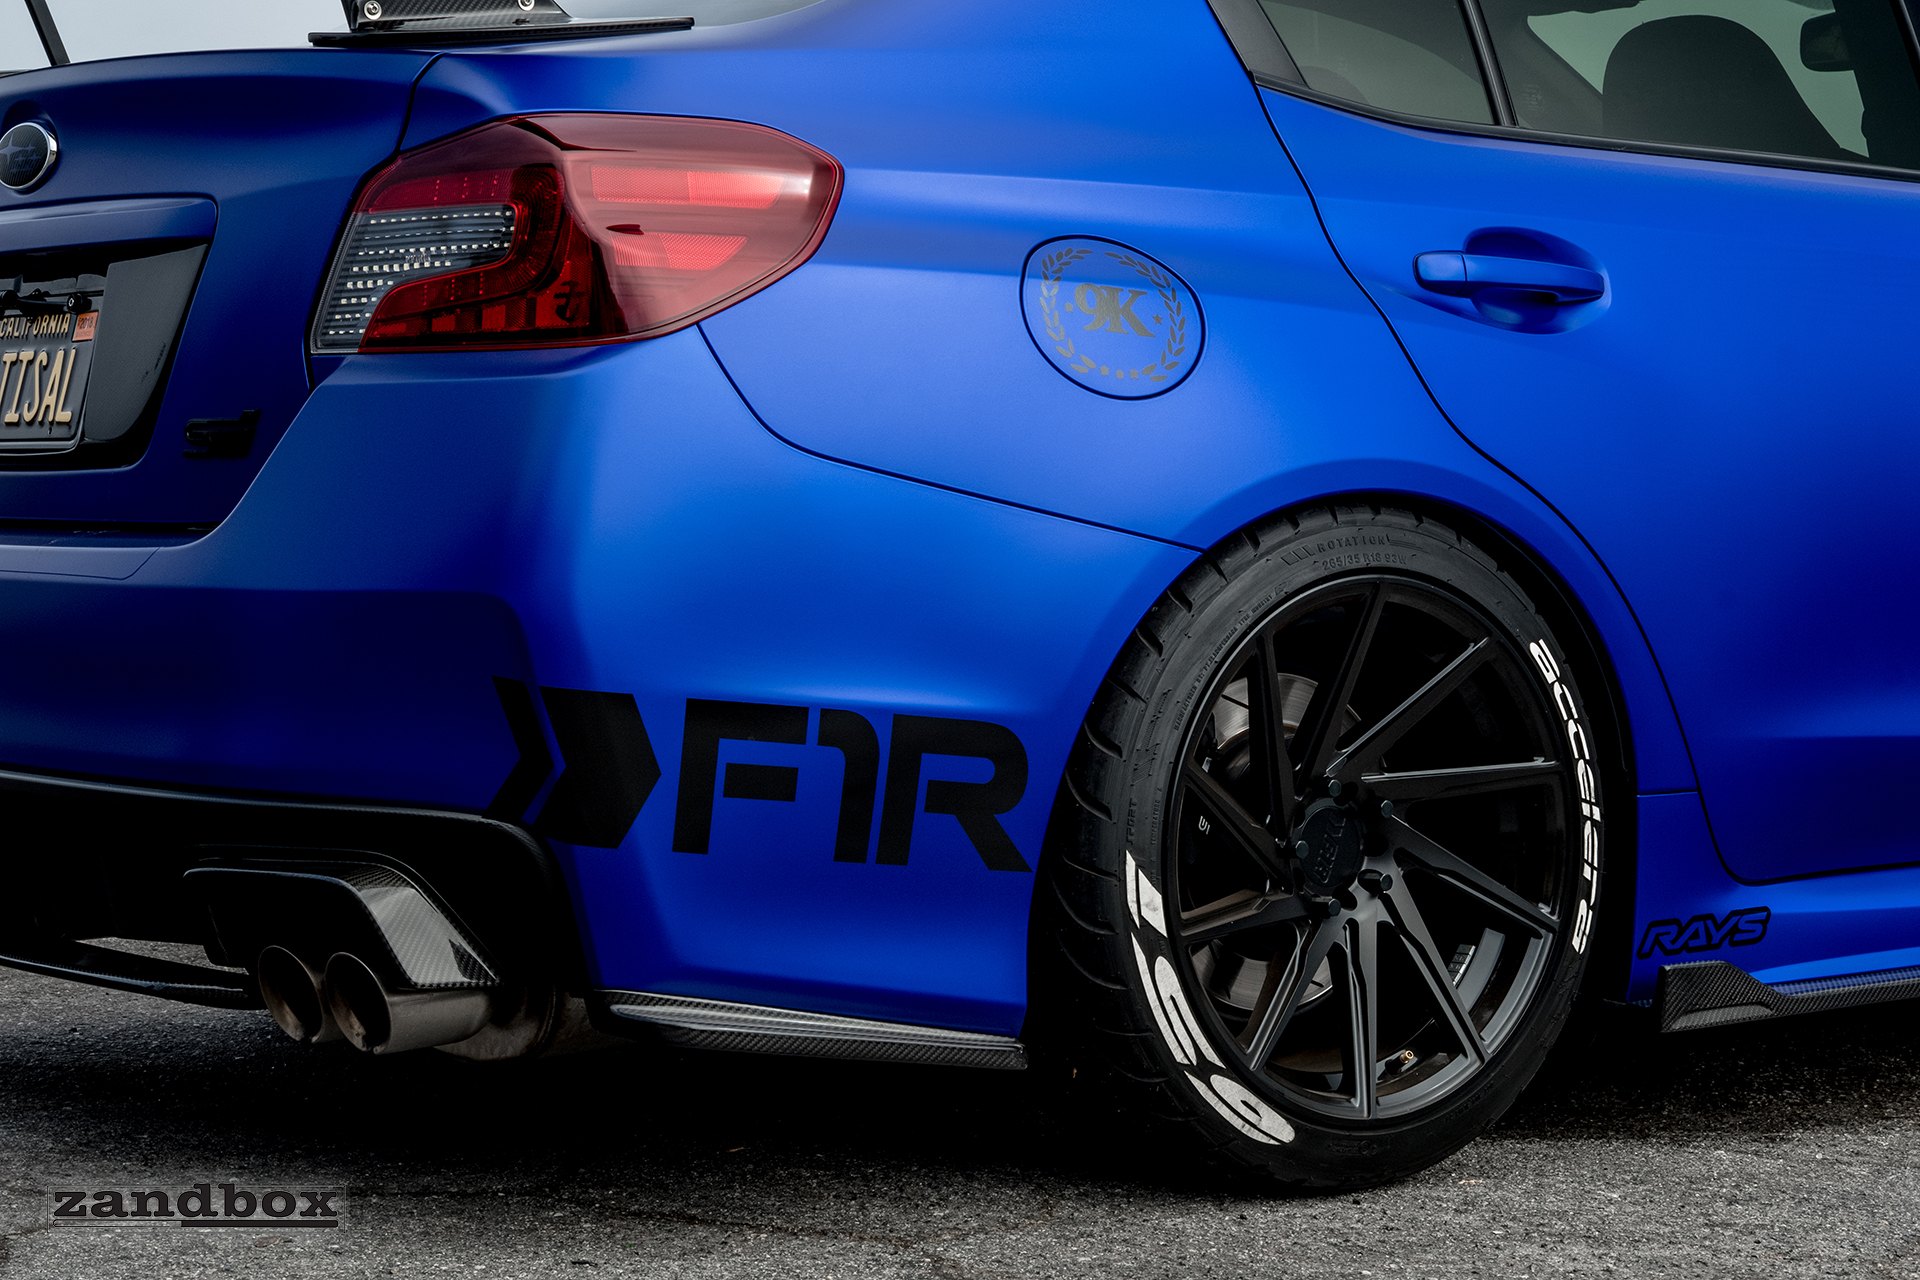 Carbon Fiber Rear Diffuser on Blue Subaru WRX - Photo by zandbox